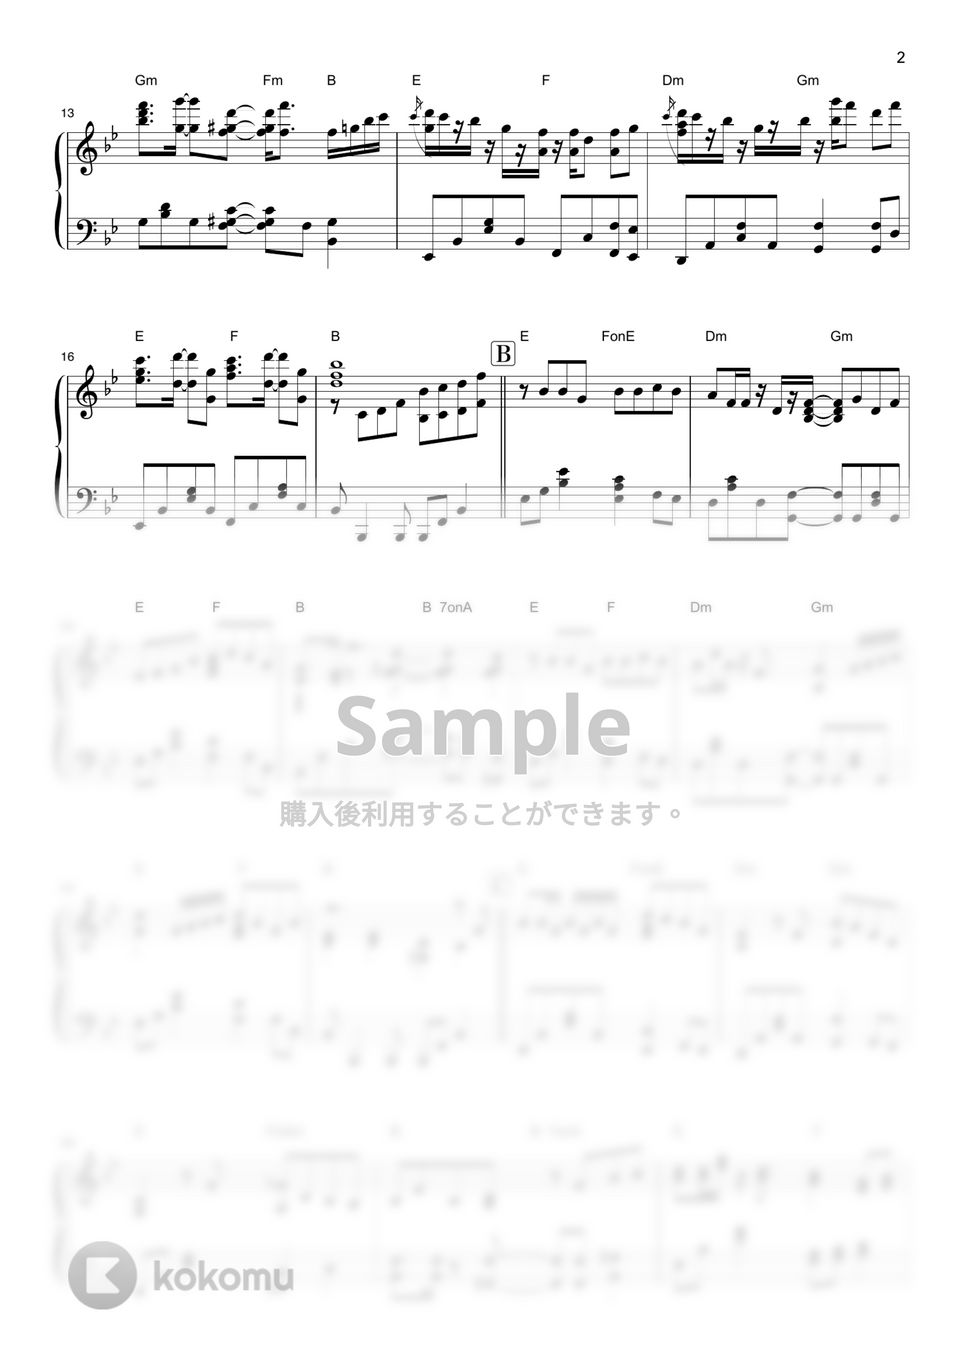 Ayase - 夜撫でるメノウ by シータピアノ